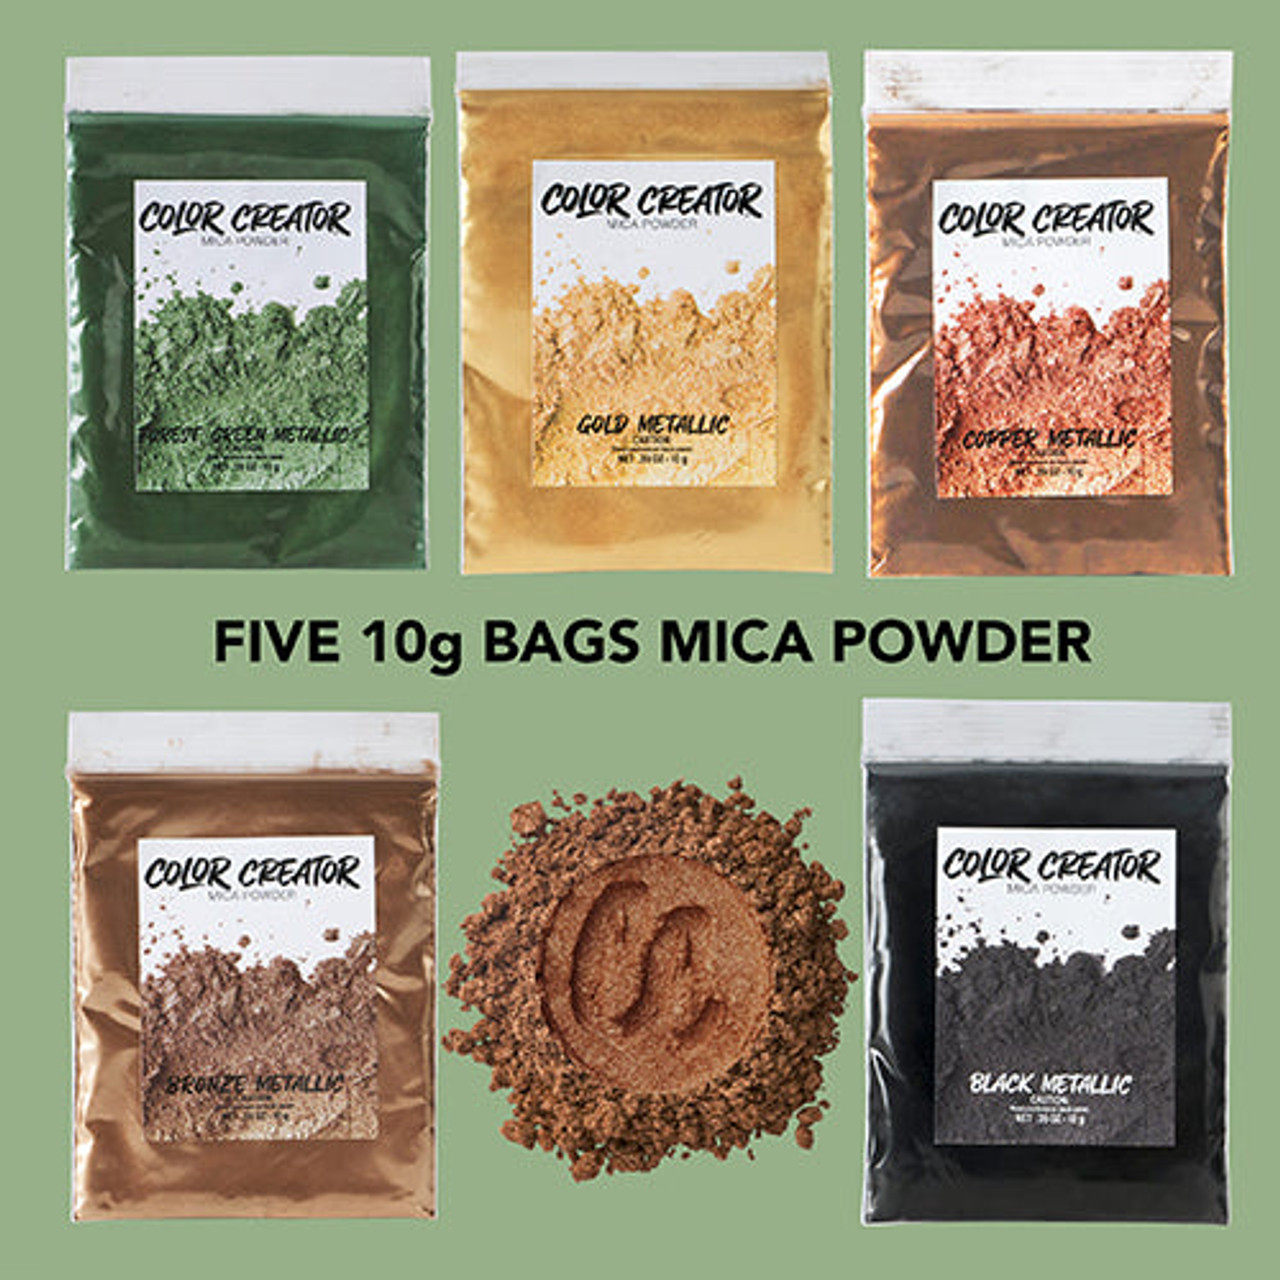 Color Creator Pacific Ocean 12 Pack Mica Powders Alcohol Inks